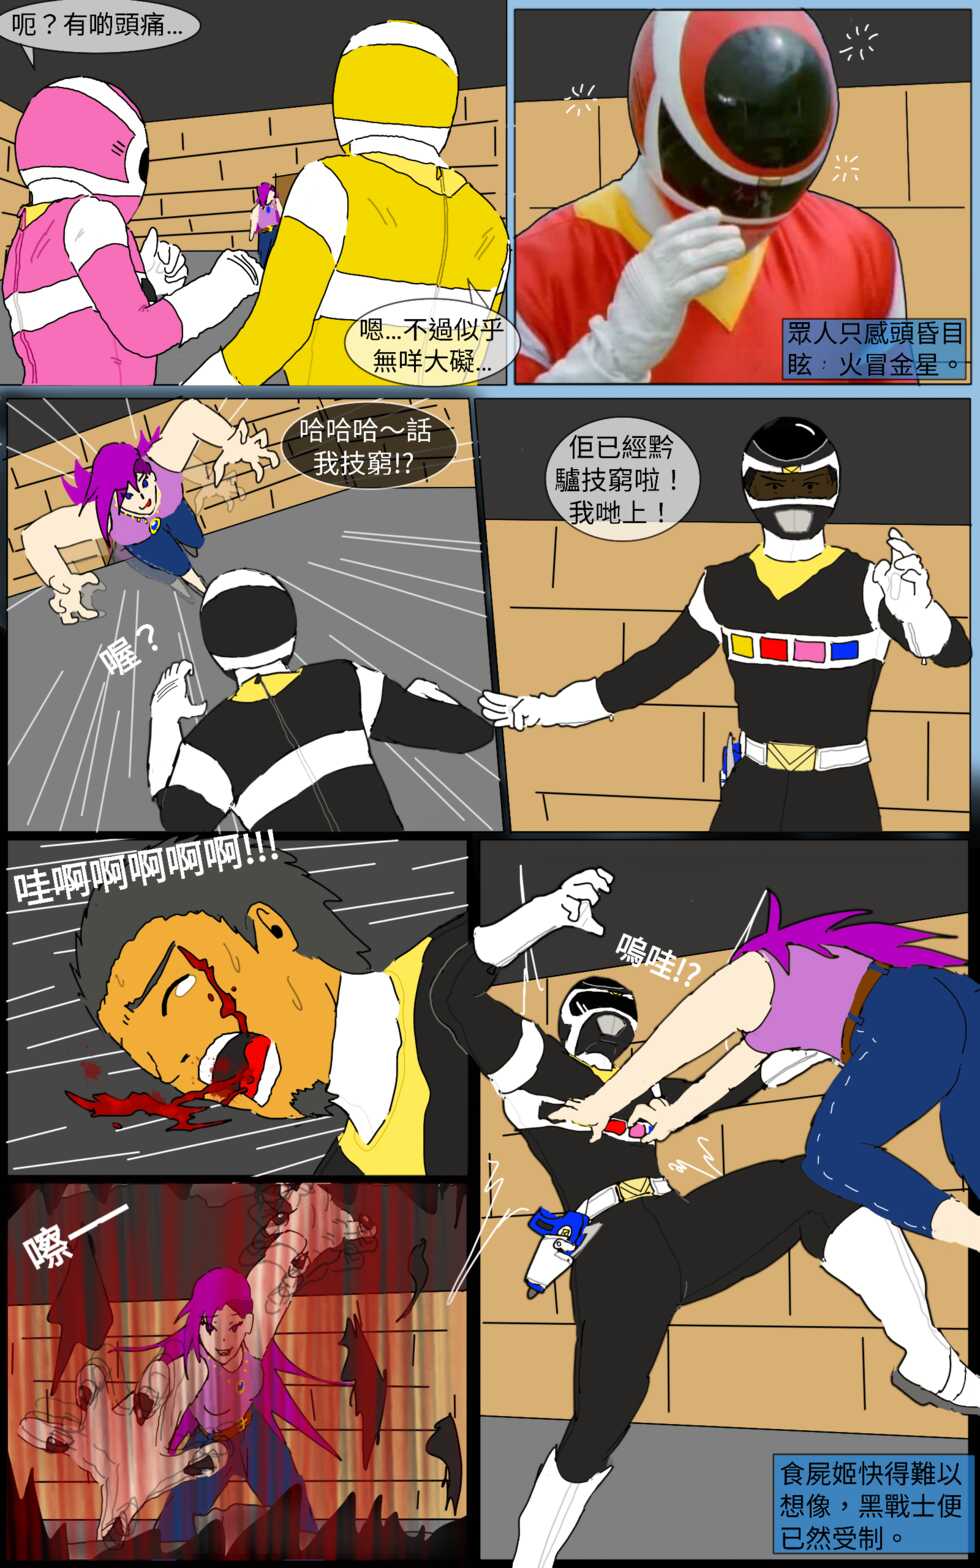 [MA] Mission 27 (Denji Sentai Megaranger) - Page 10